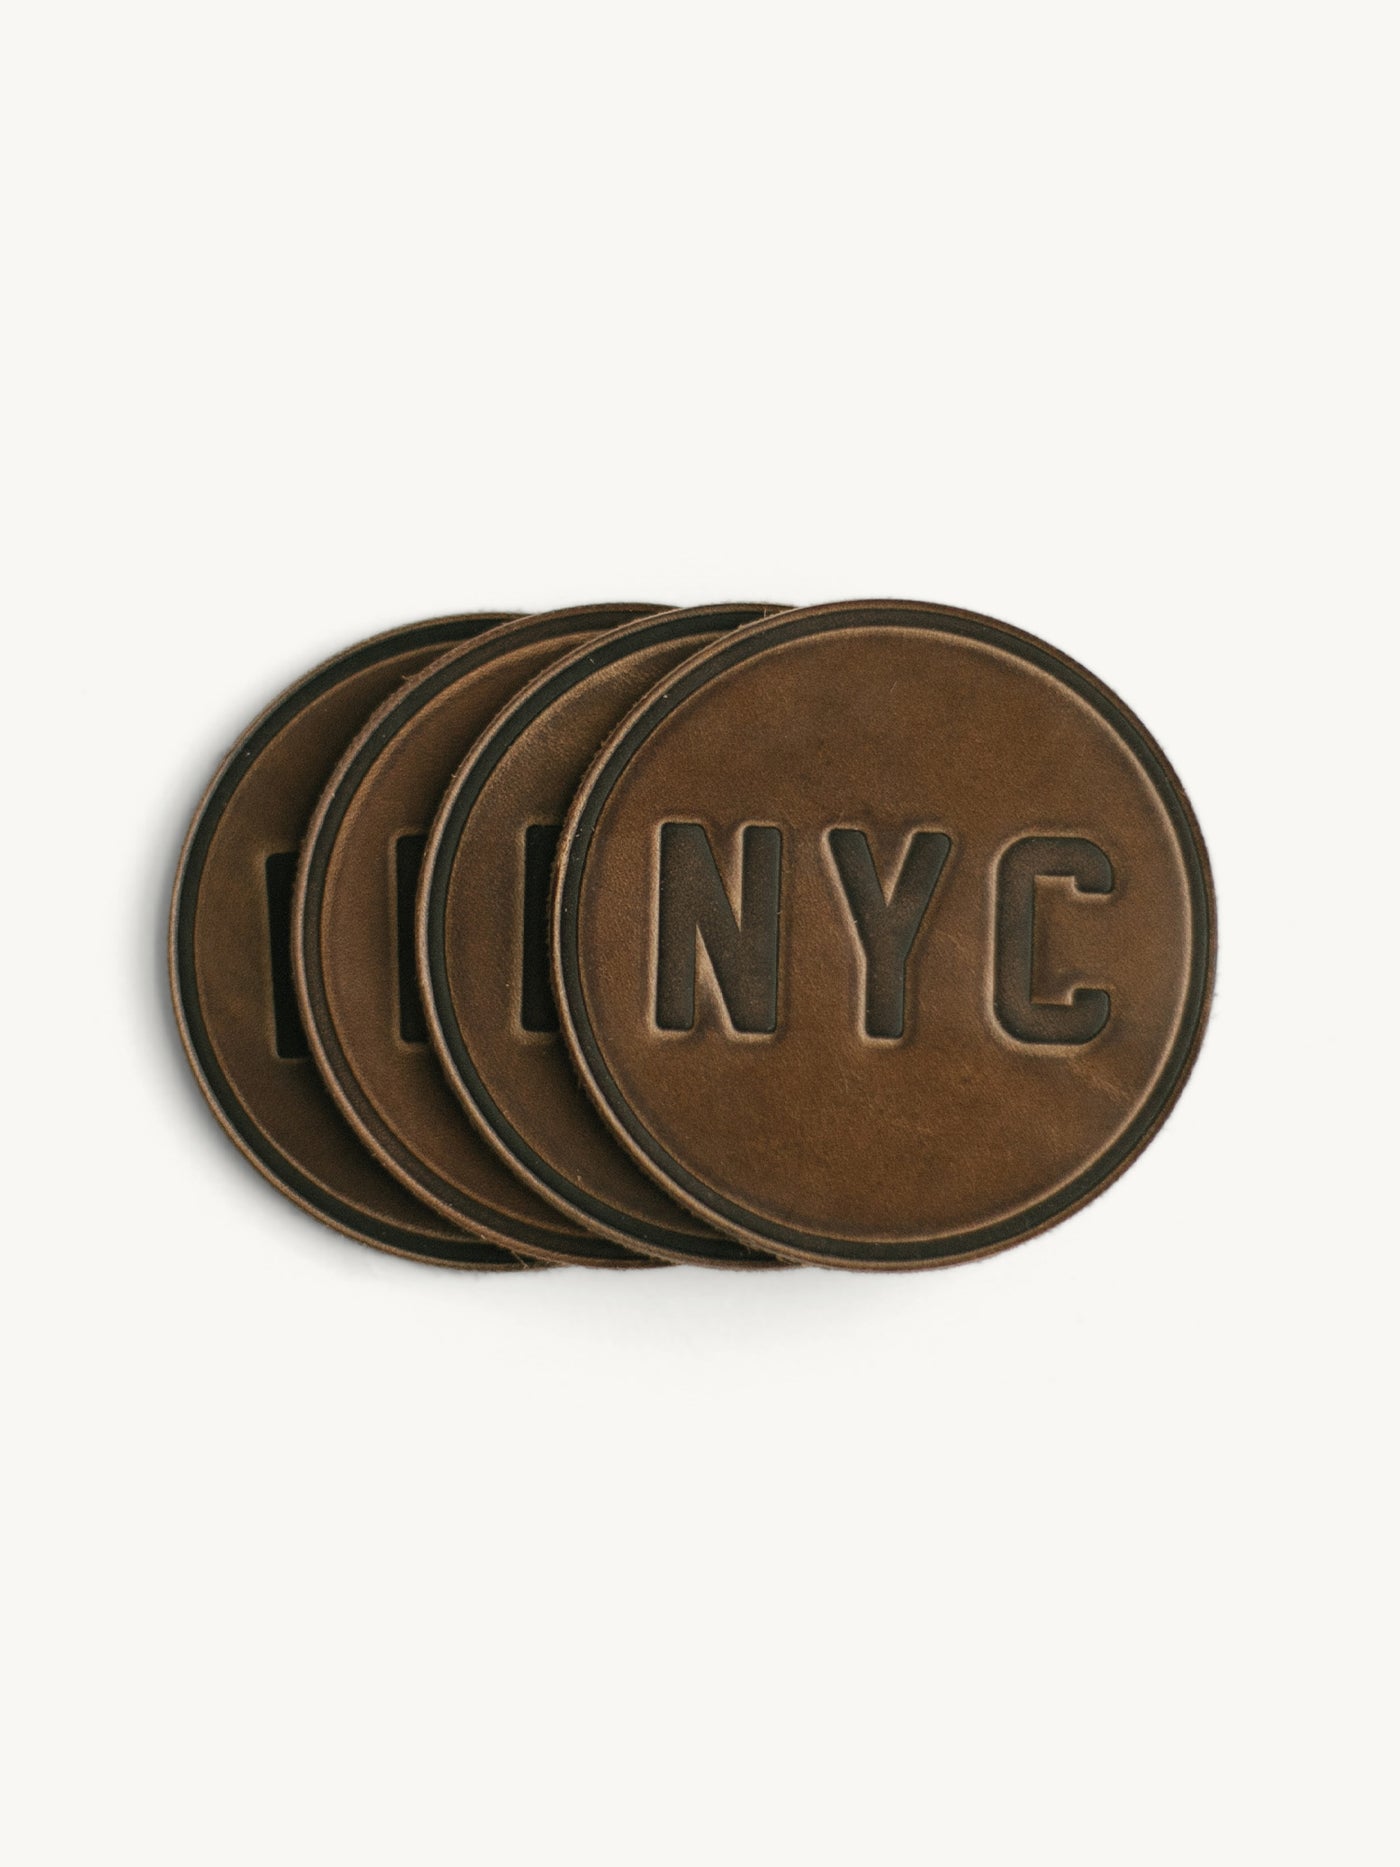 New York City Circle Coasters (NYC)